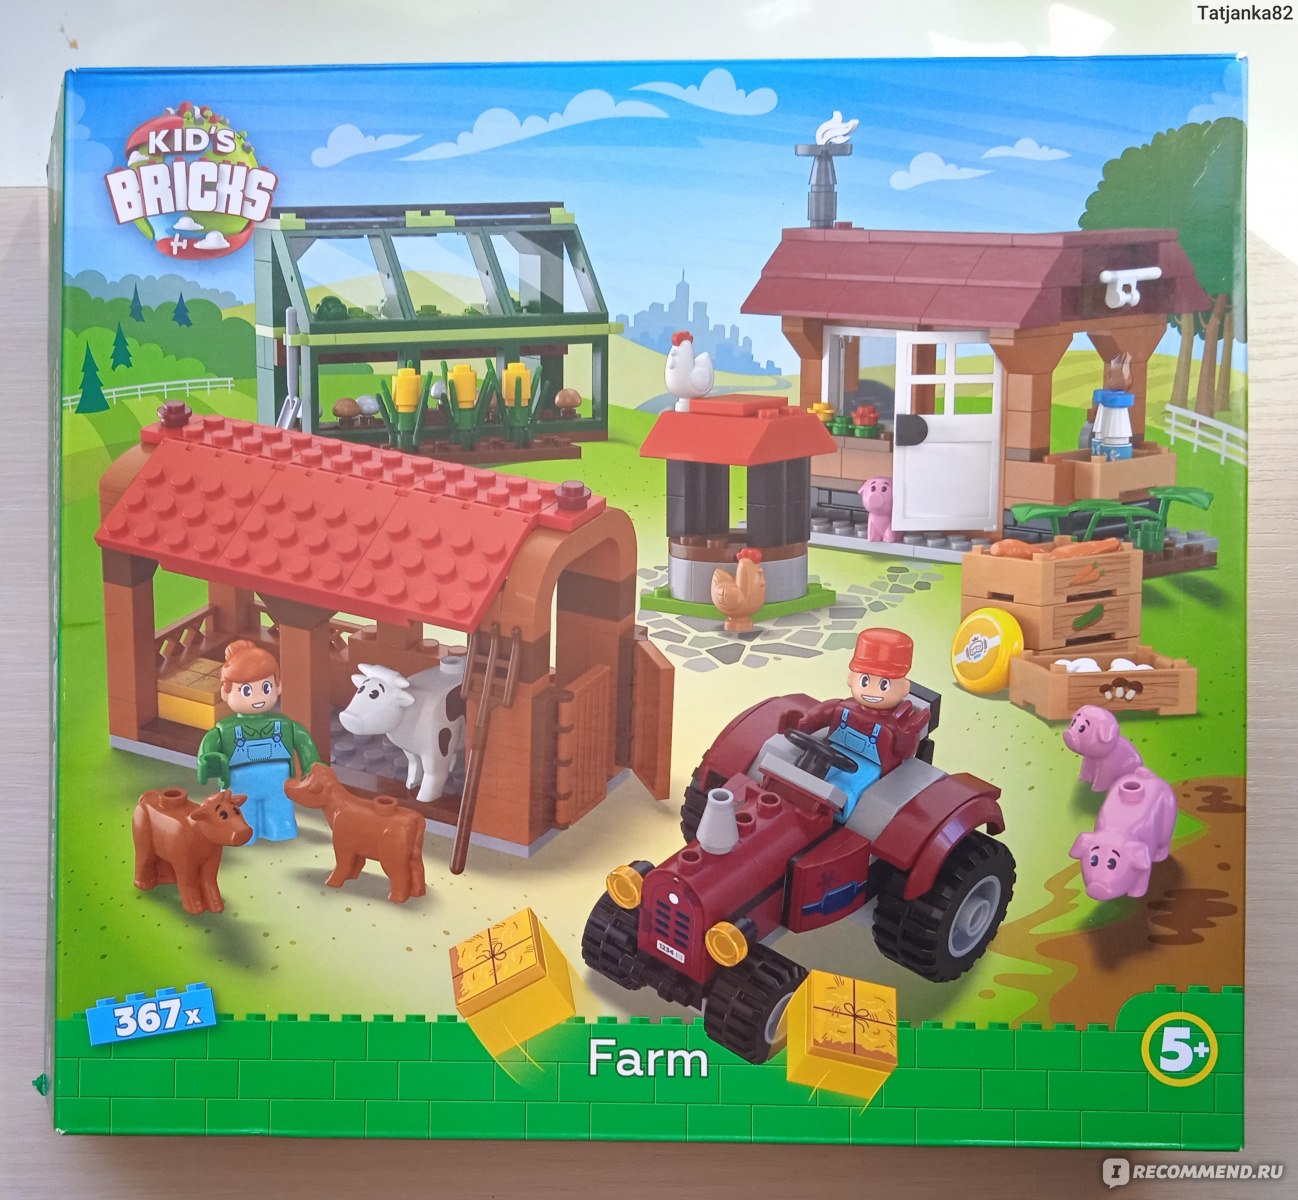  конструктор Kids bricks Ферма